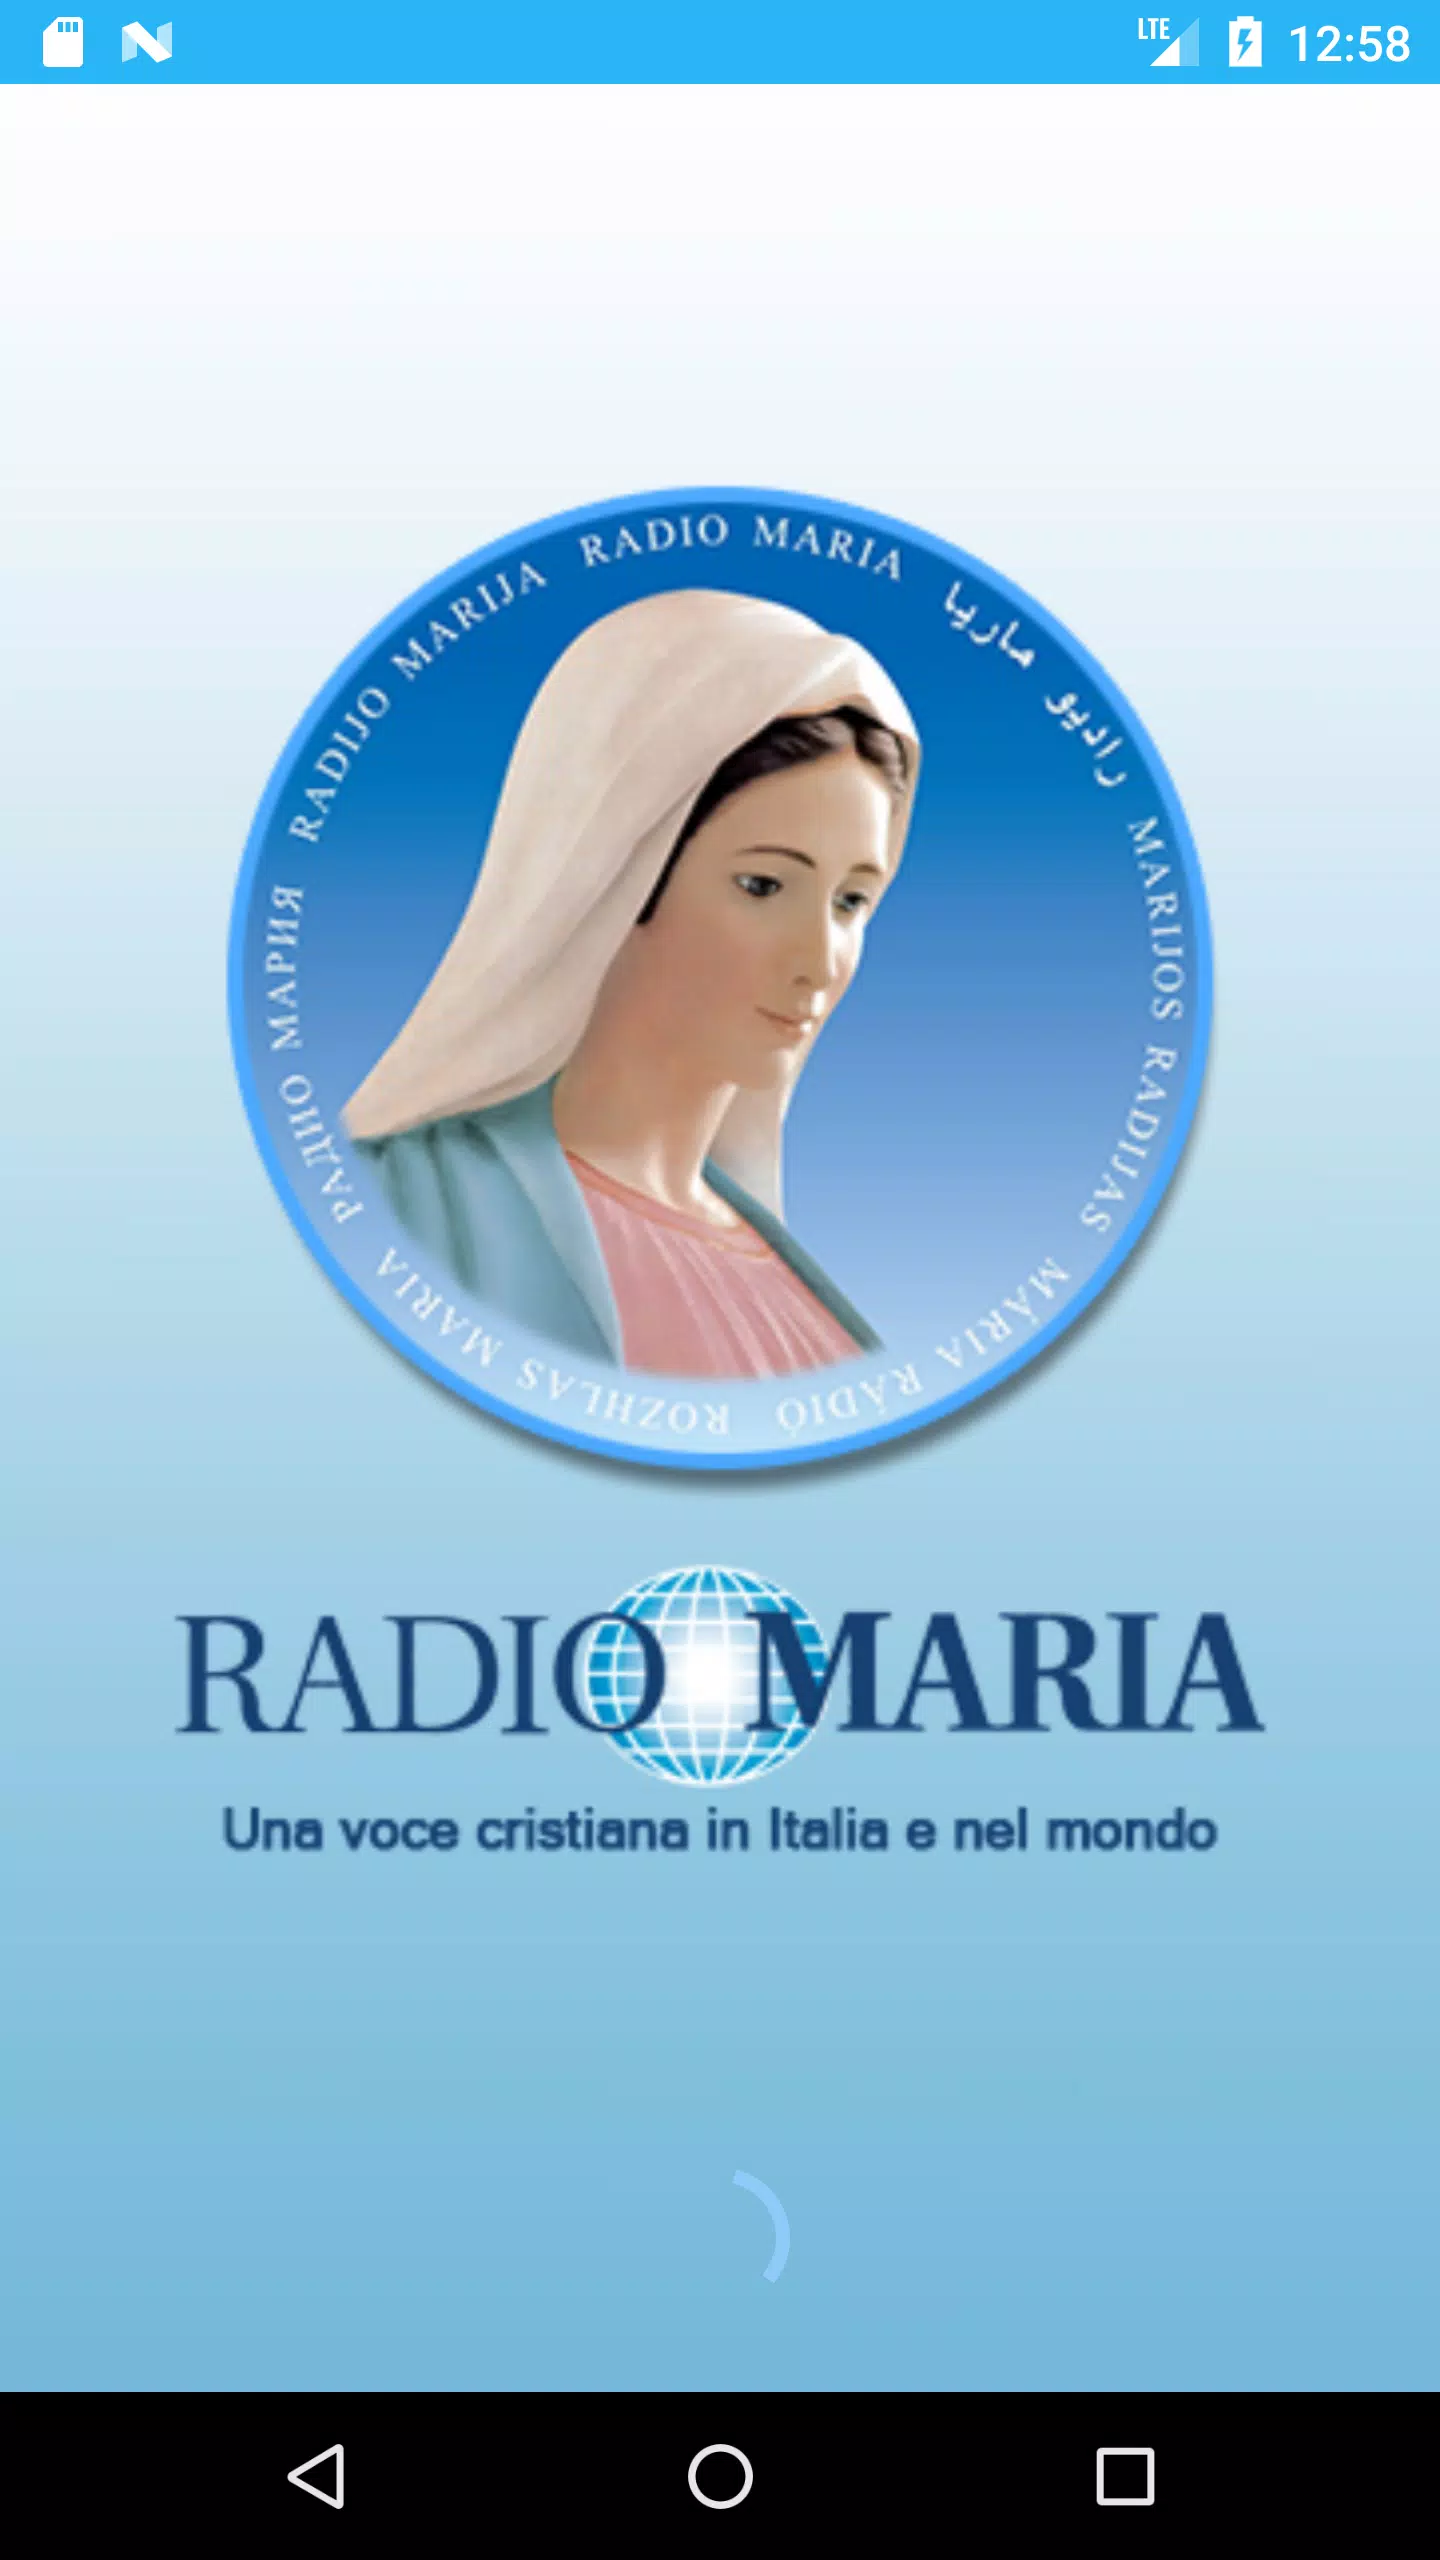 Radio Maria Italia for Android - APK Download